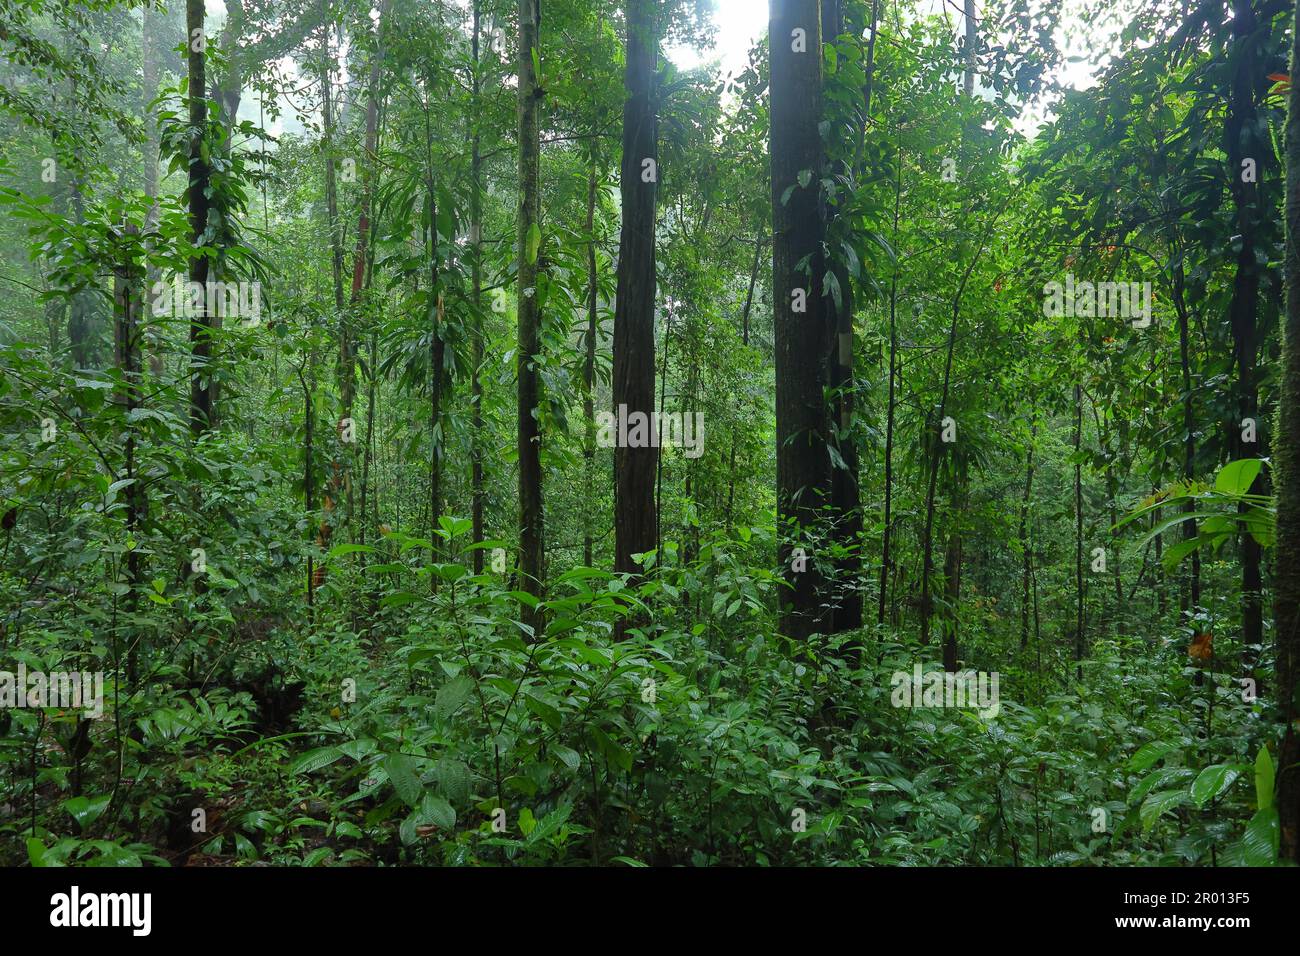 Interior of the Amazon rainforest in French Guiana. Primary rainforest, Amazonia. Brazil jungle, trees in the rainforest. Stock Photo